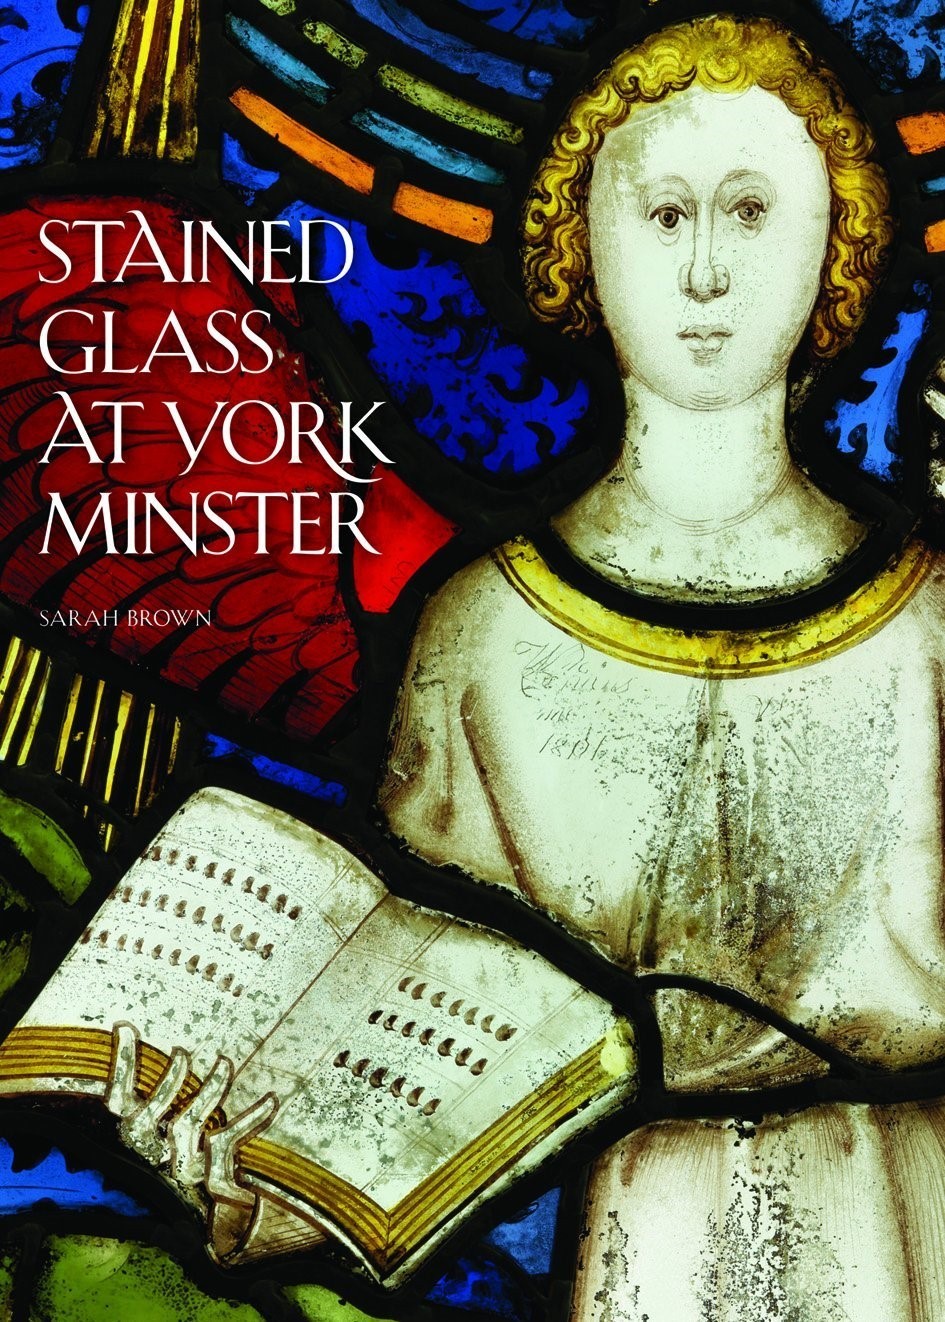 New book puts spotlight on Minster’s famed glass